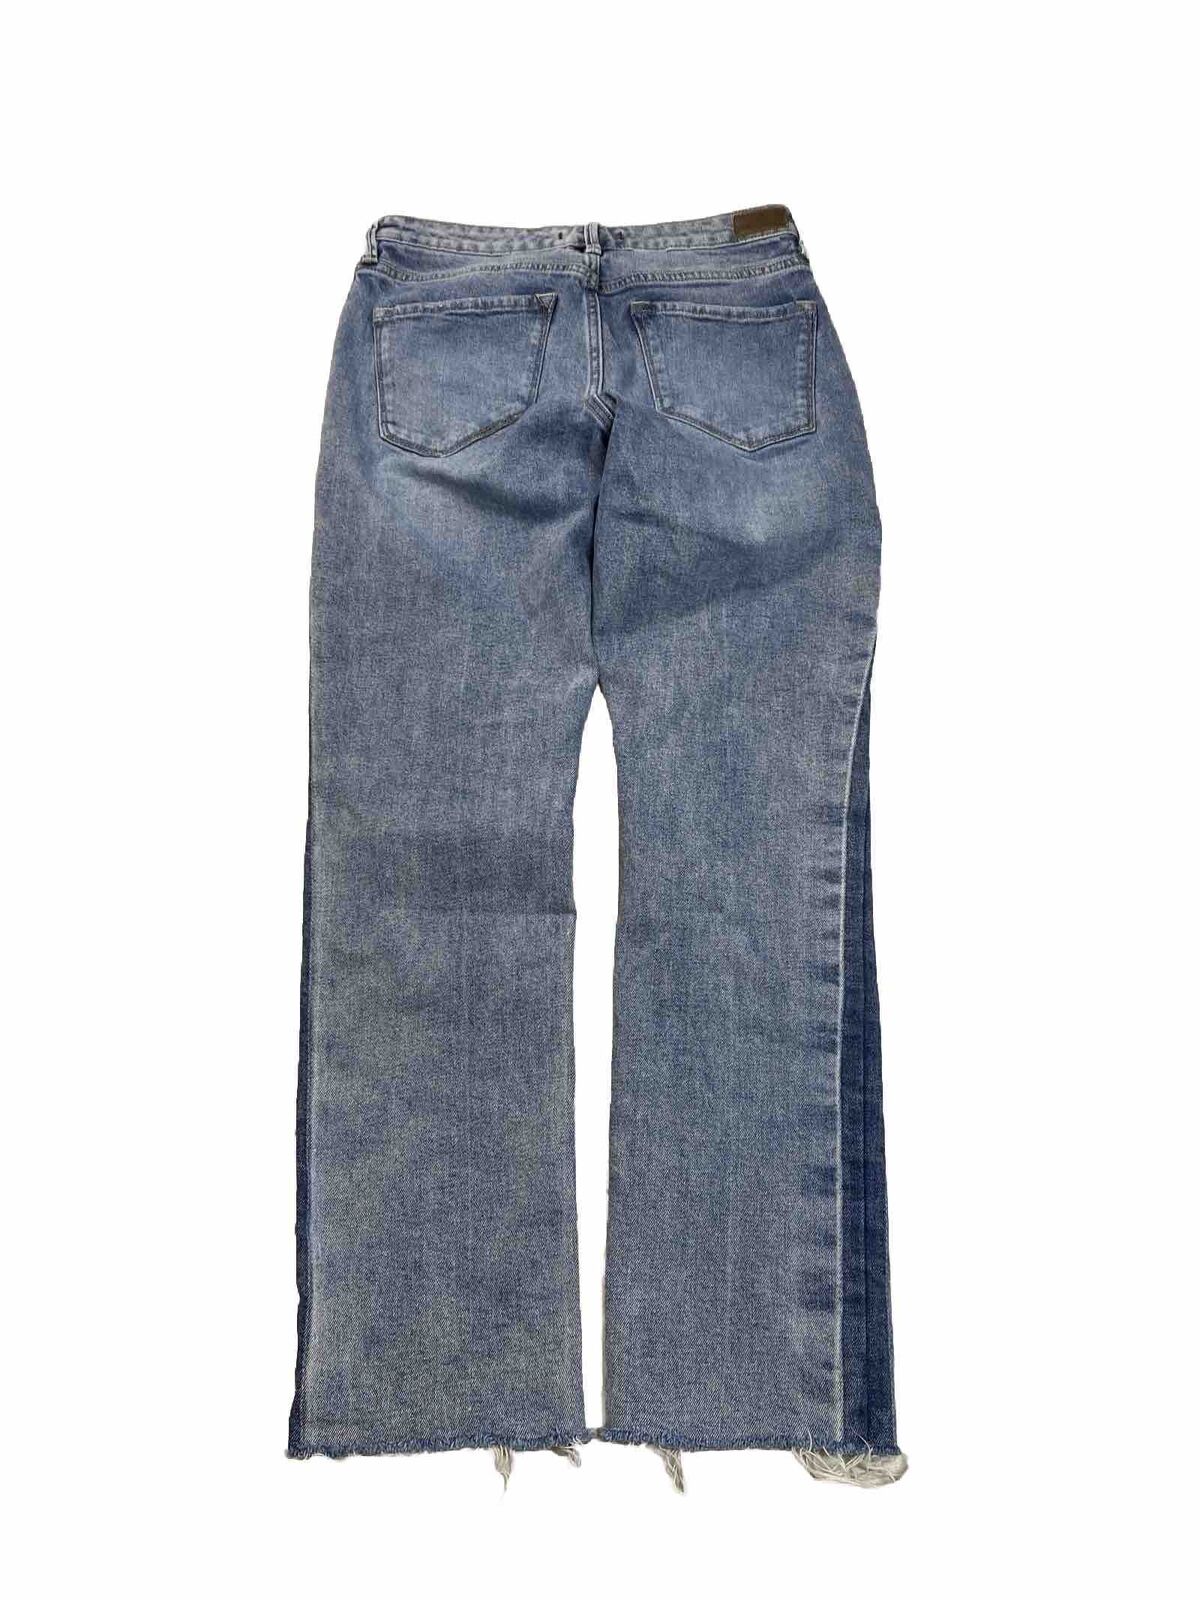 Dear John Women's Medium Wash Slim Tapered Jeans - 28